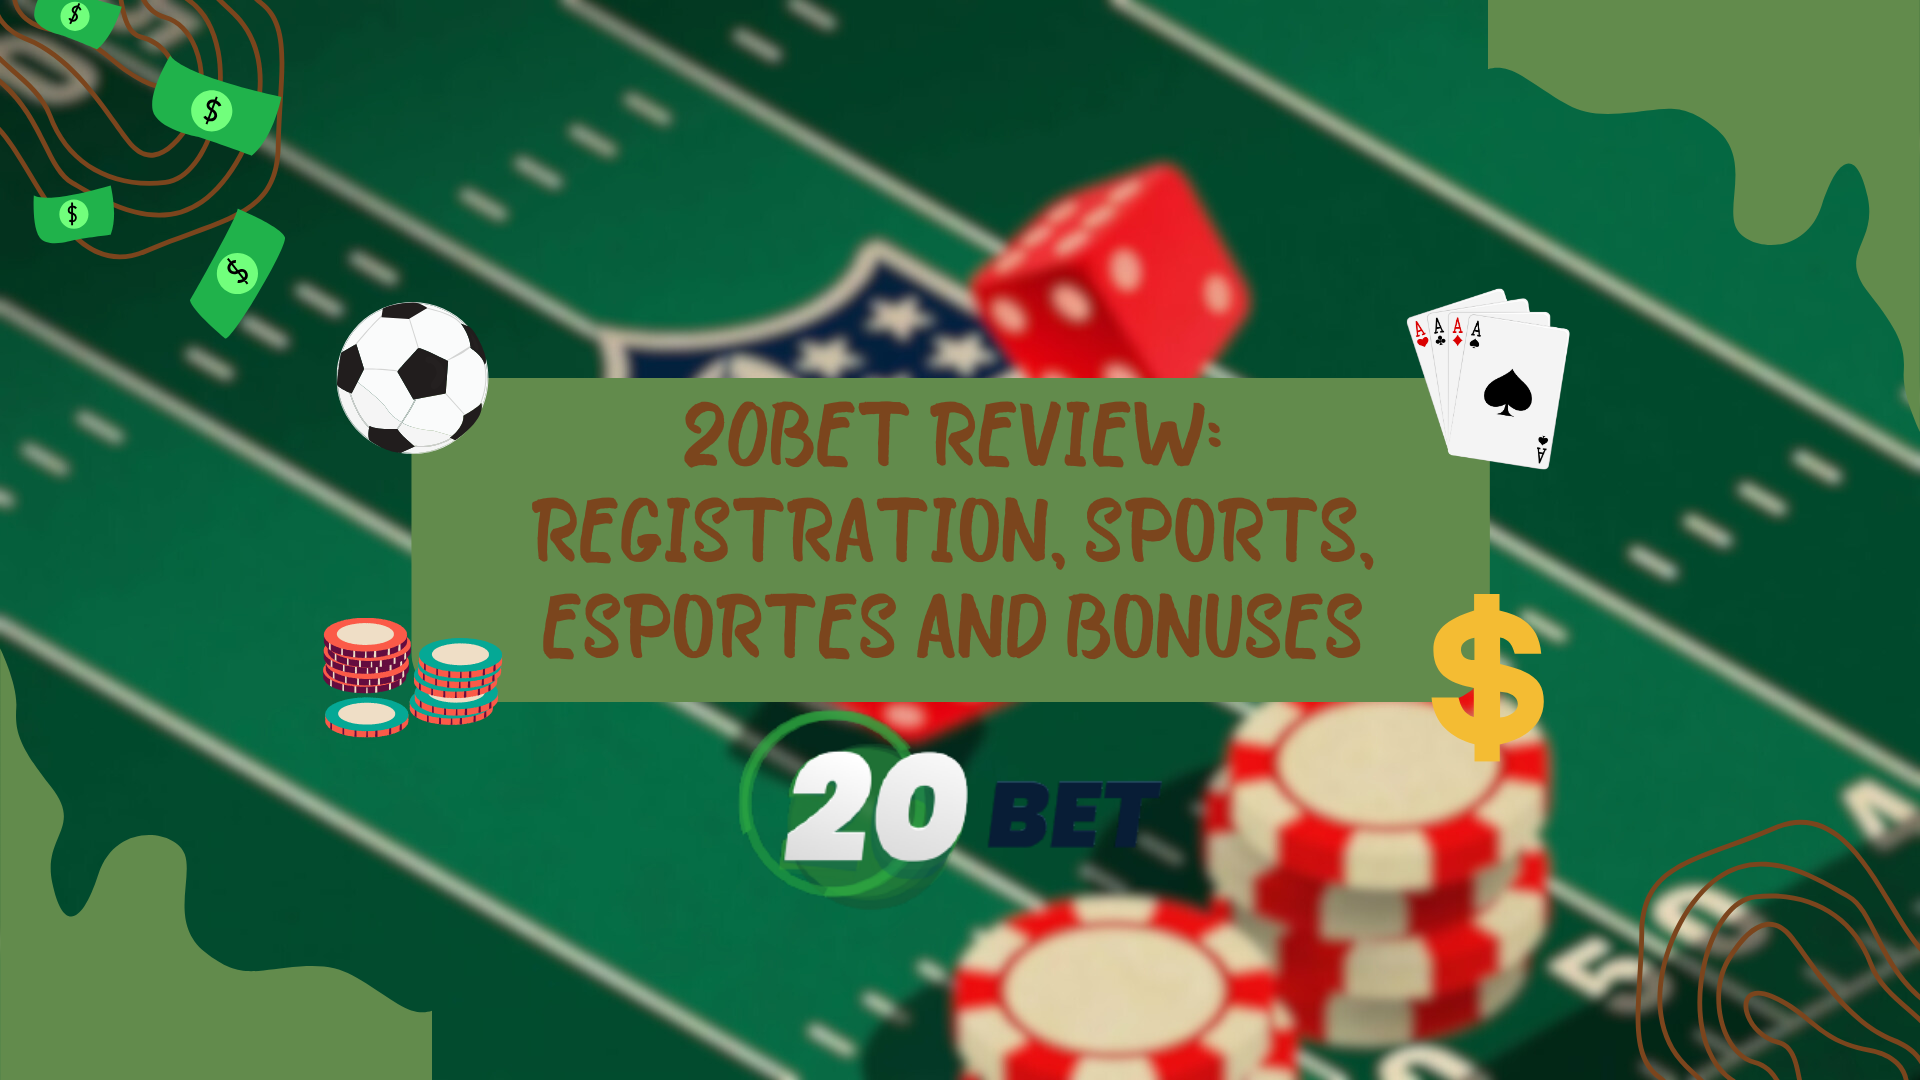 20bet Review: Registration, sports, esportes and bonuses